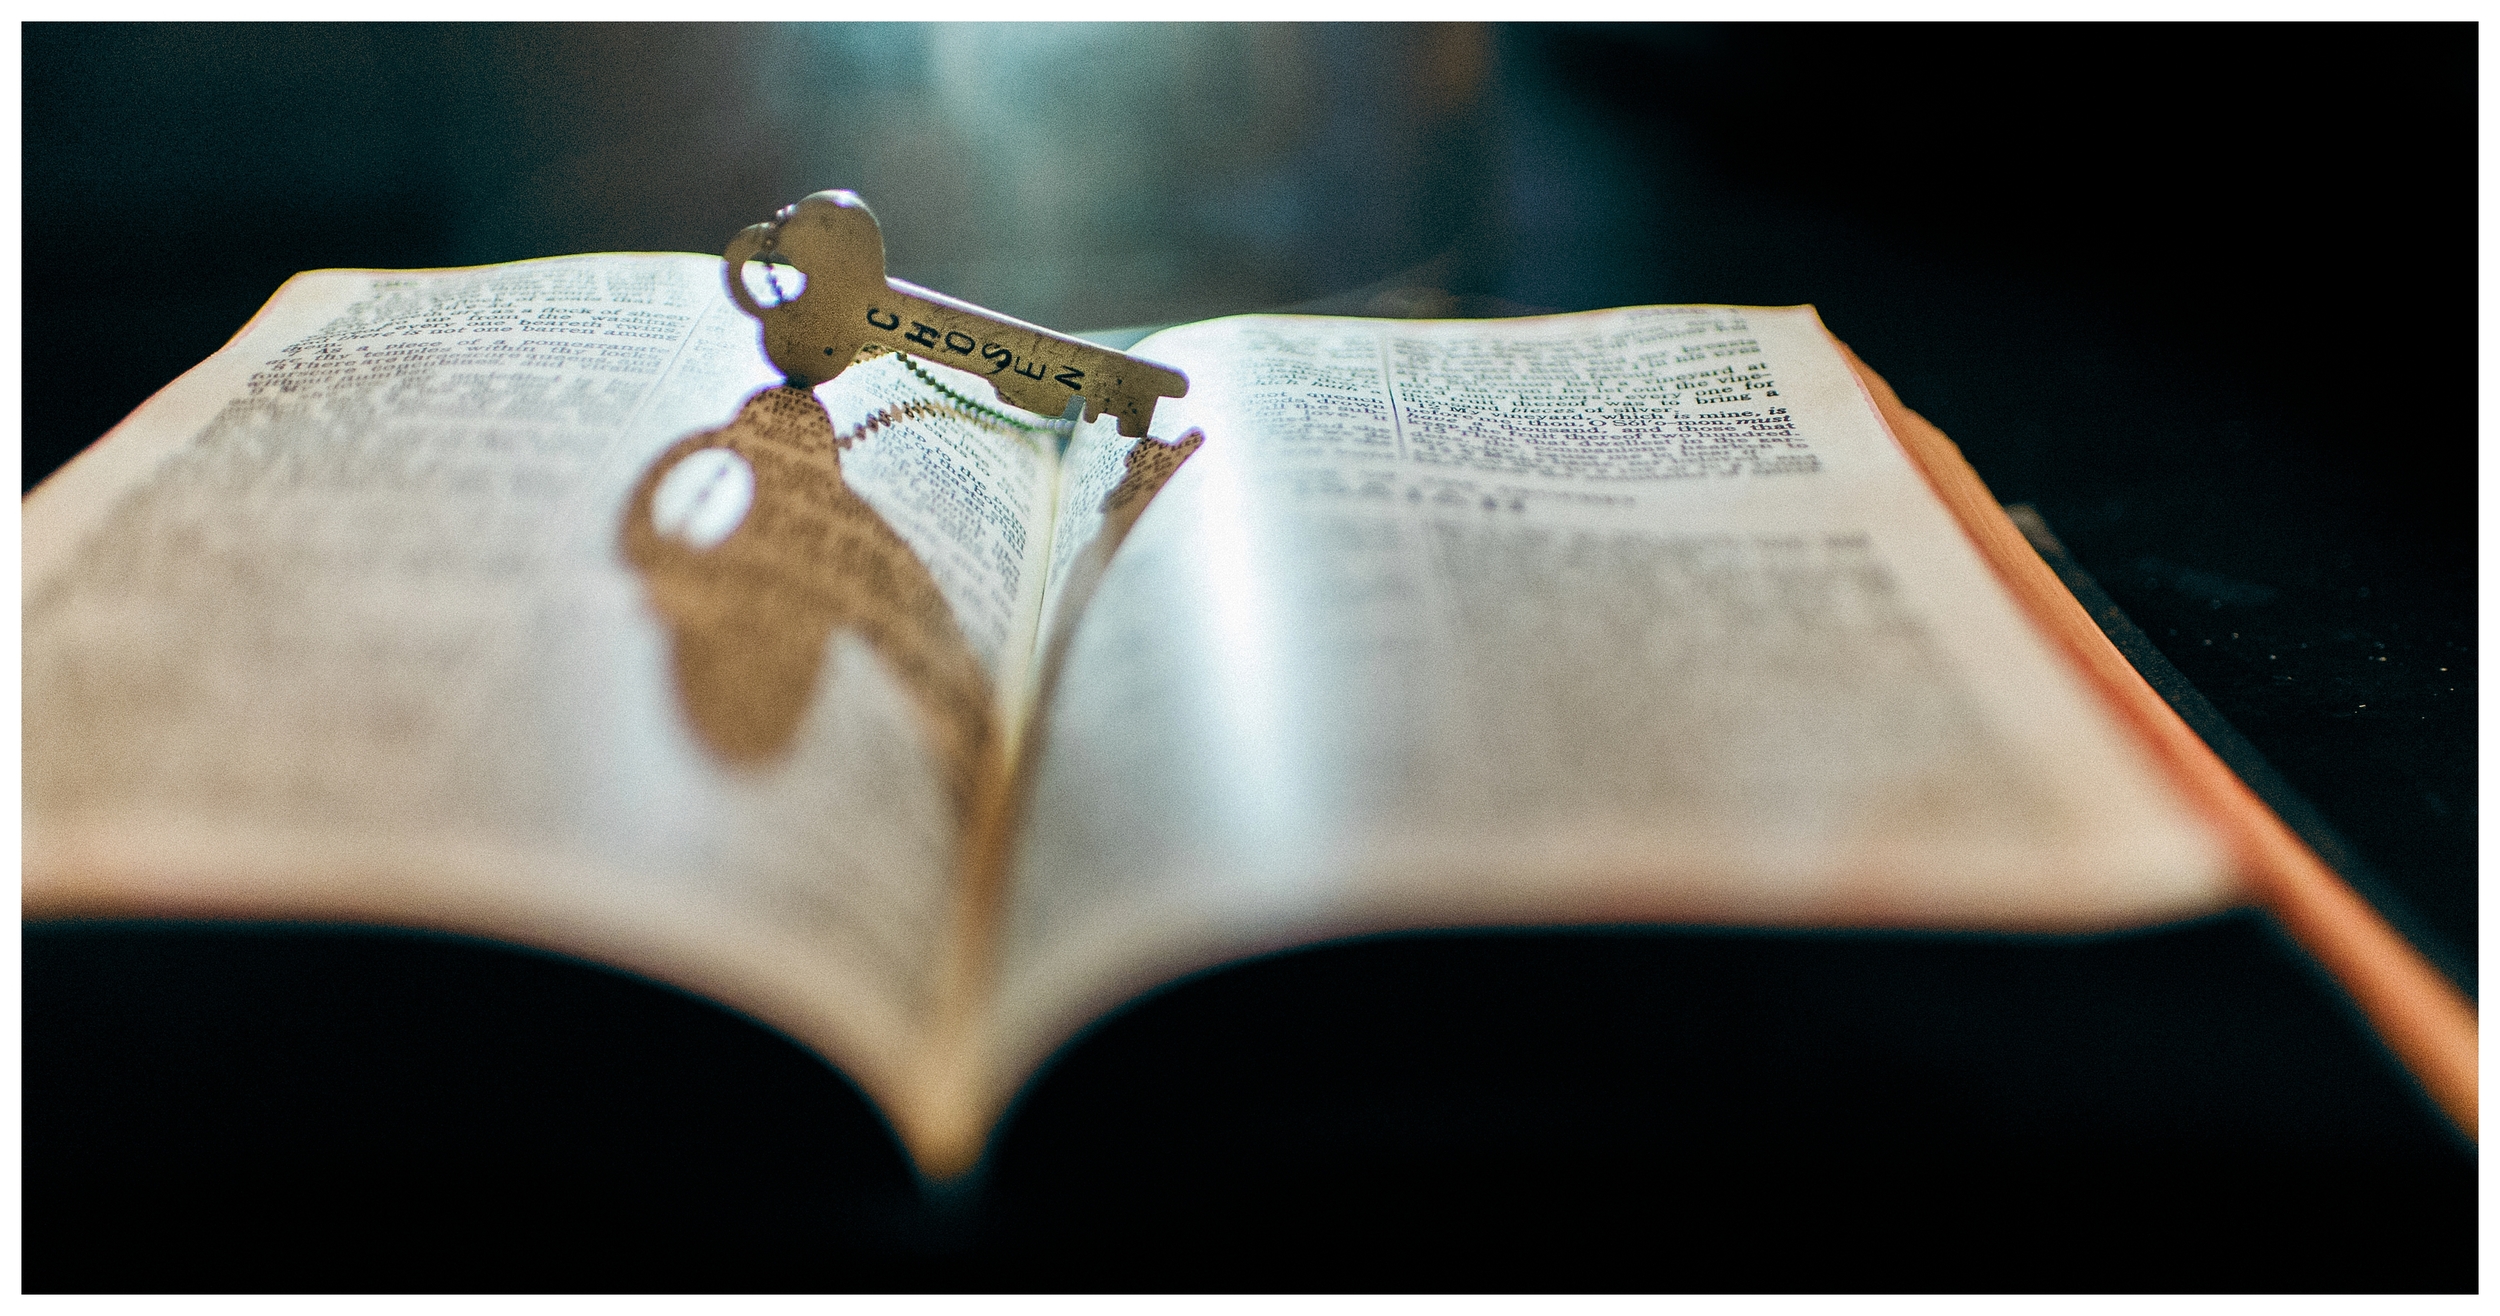 Chosen Key | Bible | Fostered Purpose